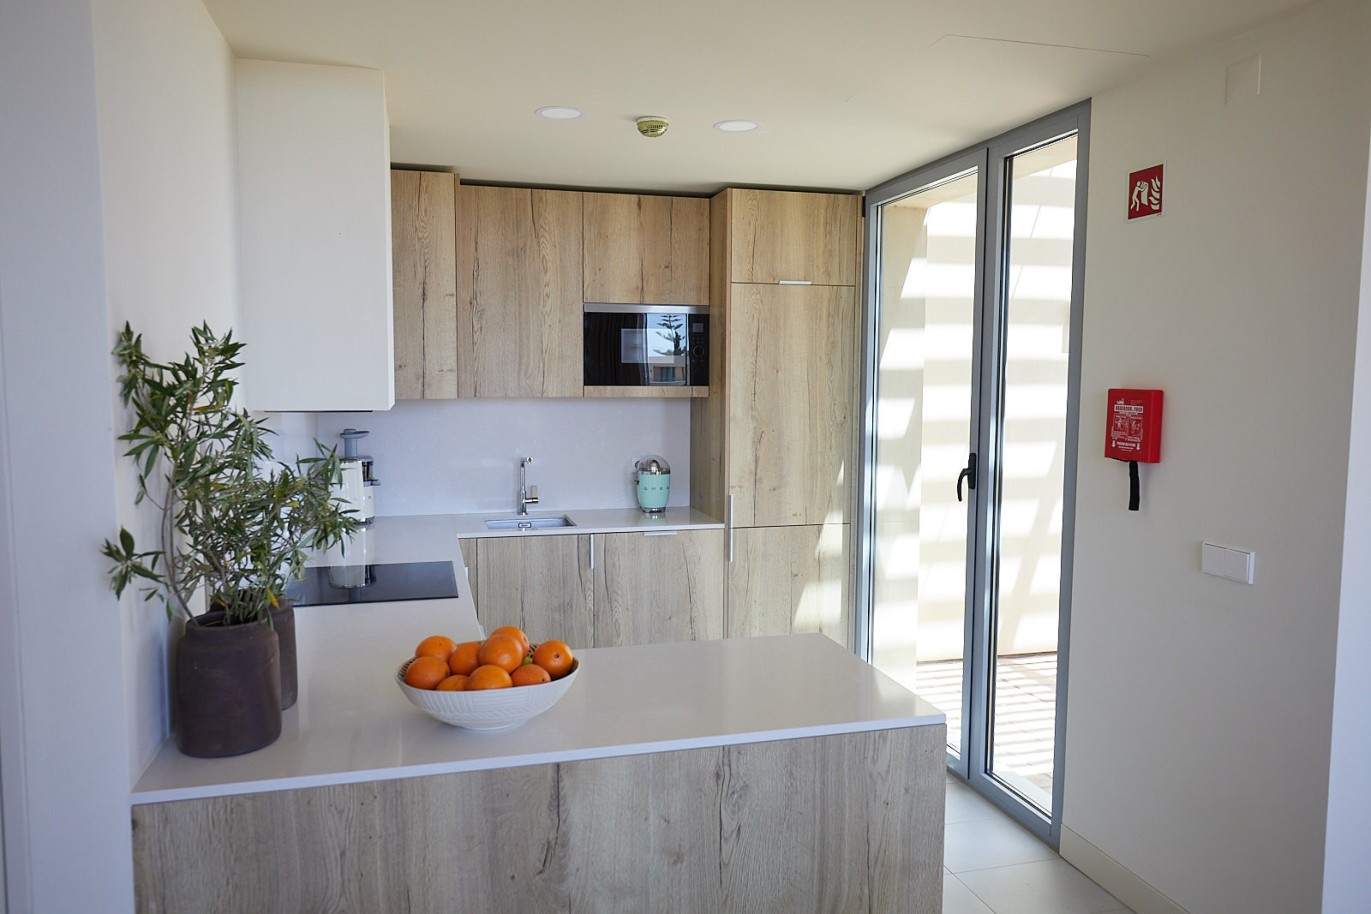 2 bedroom apartment in resort, for sale in Porches, Algarve_229239